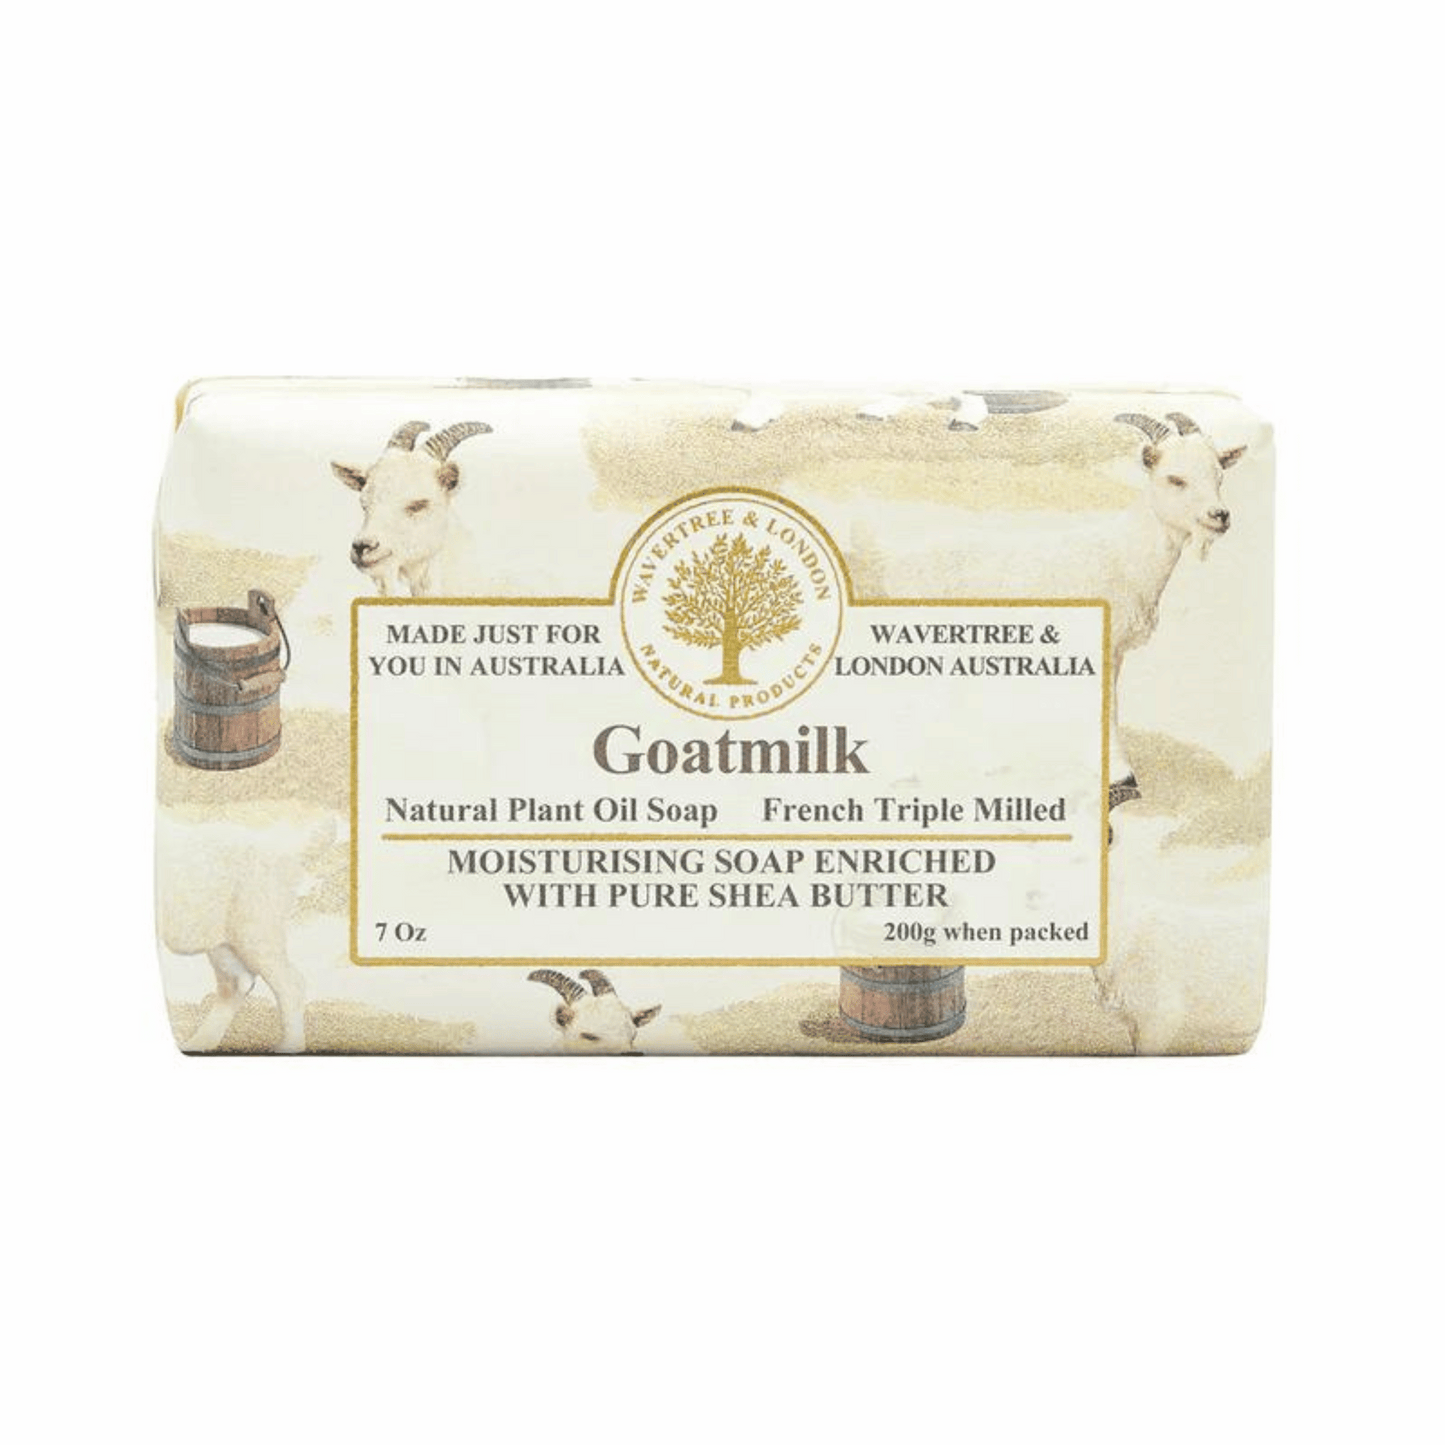 Primary Image of Goatsmilk Soap Bar